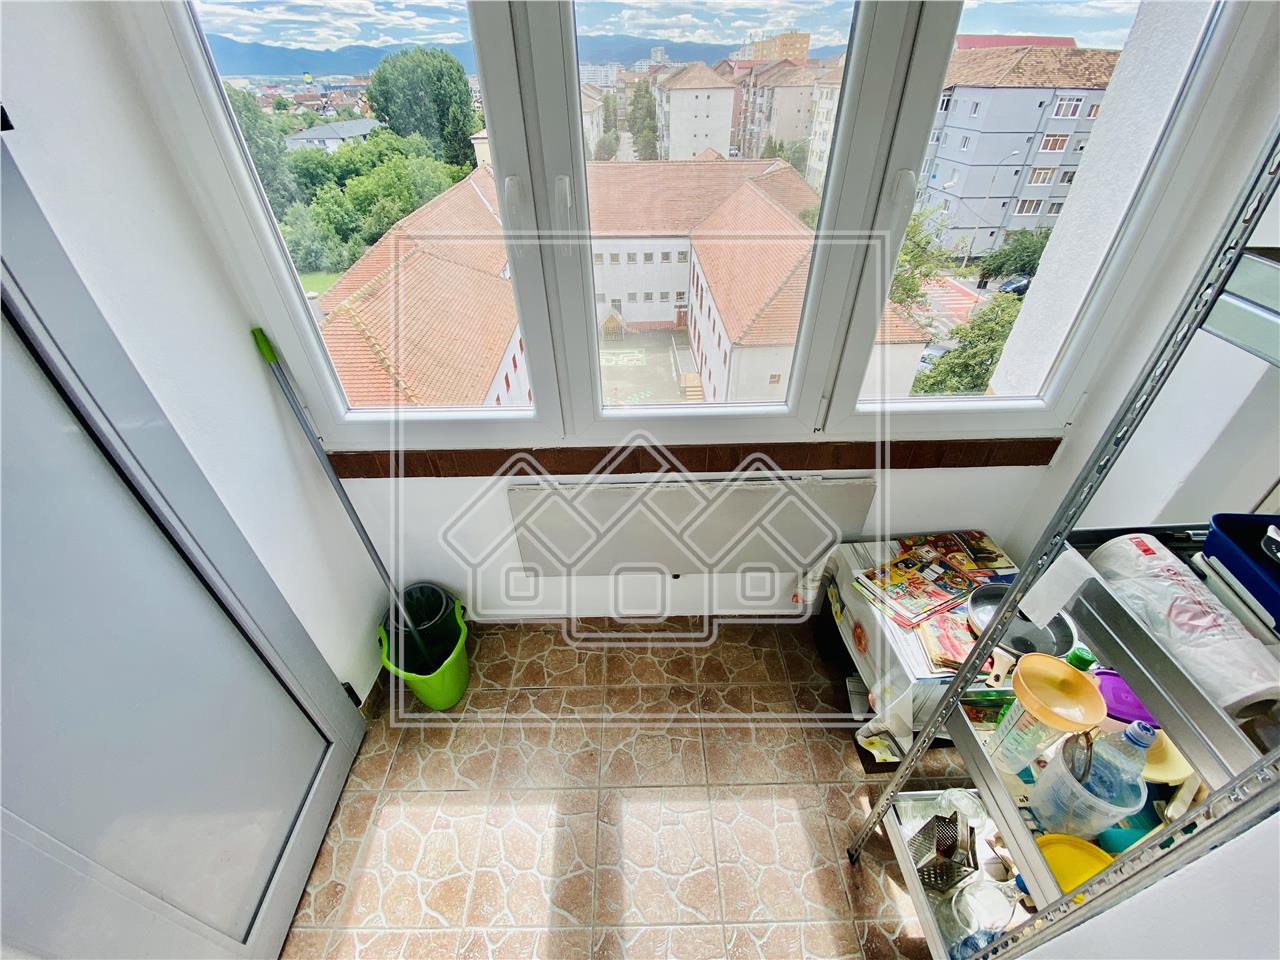 Apartament de vanzare in Sibiu - 3 camere si balcon - recent renovat